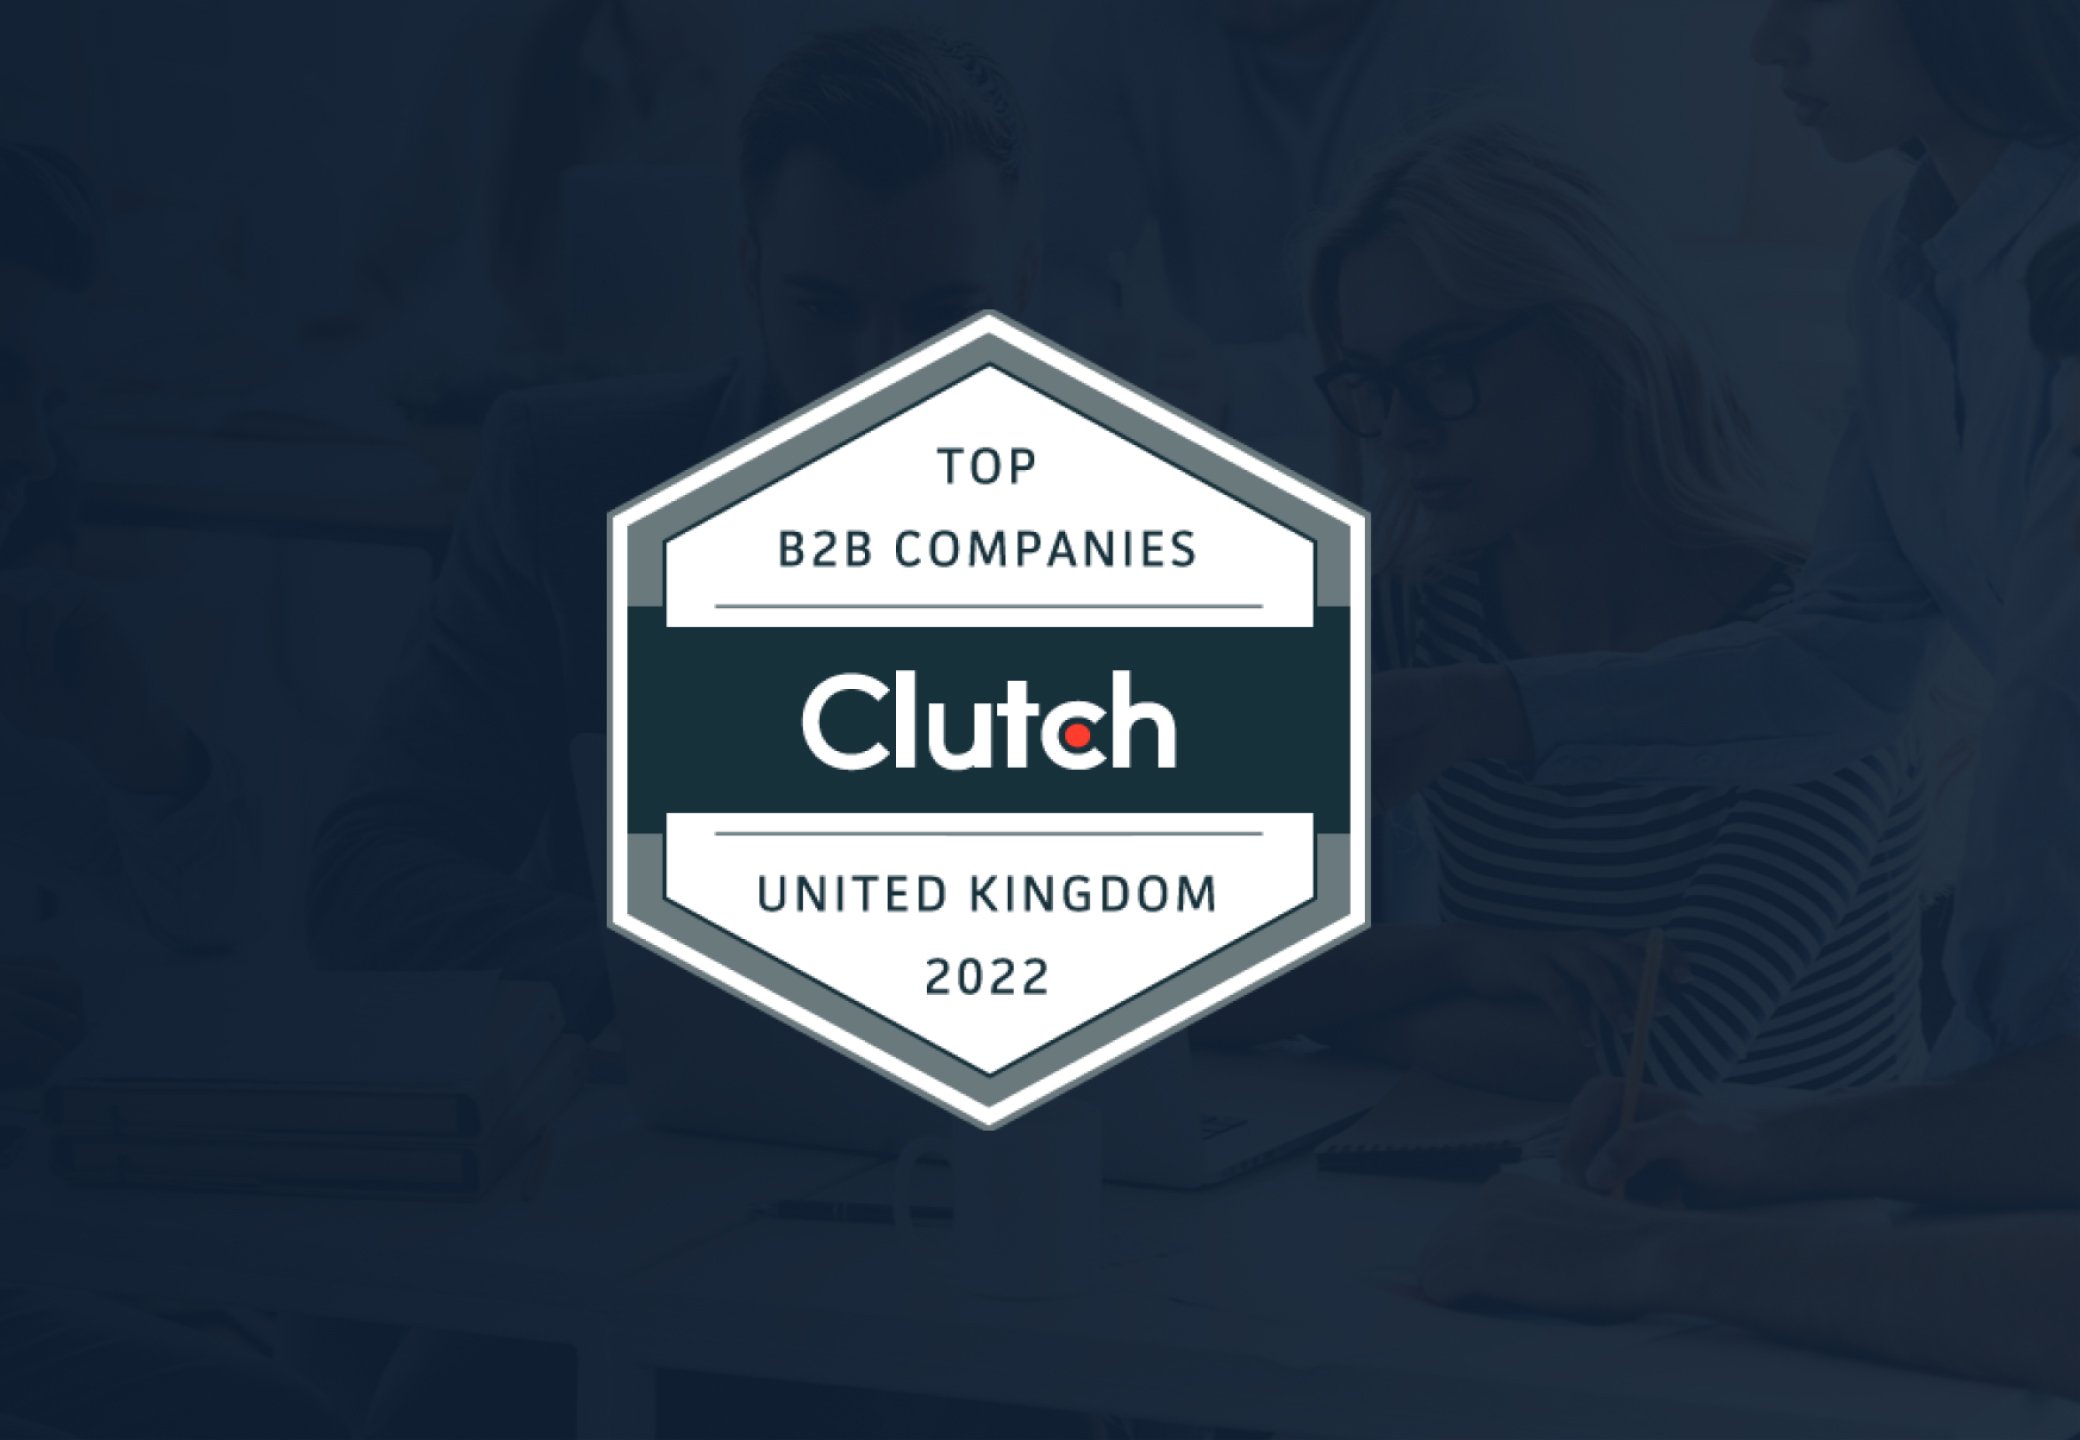 We recently won Clutch Top B2B Companies Award 2022